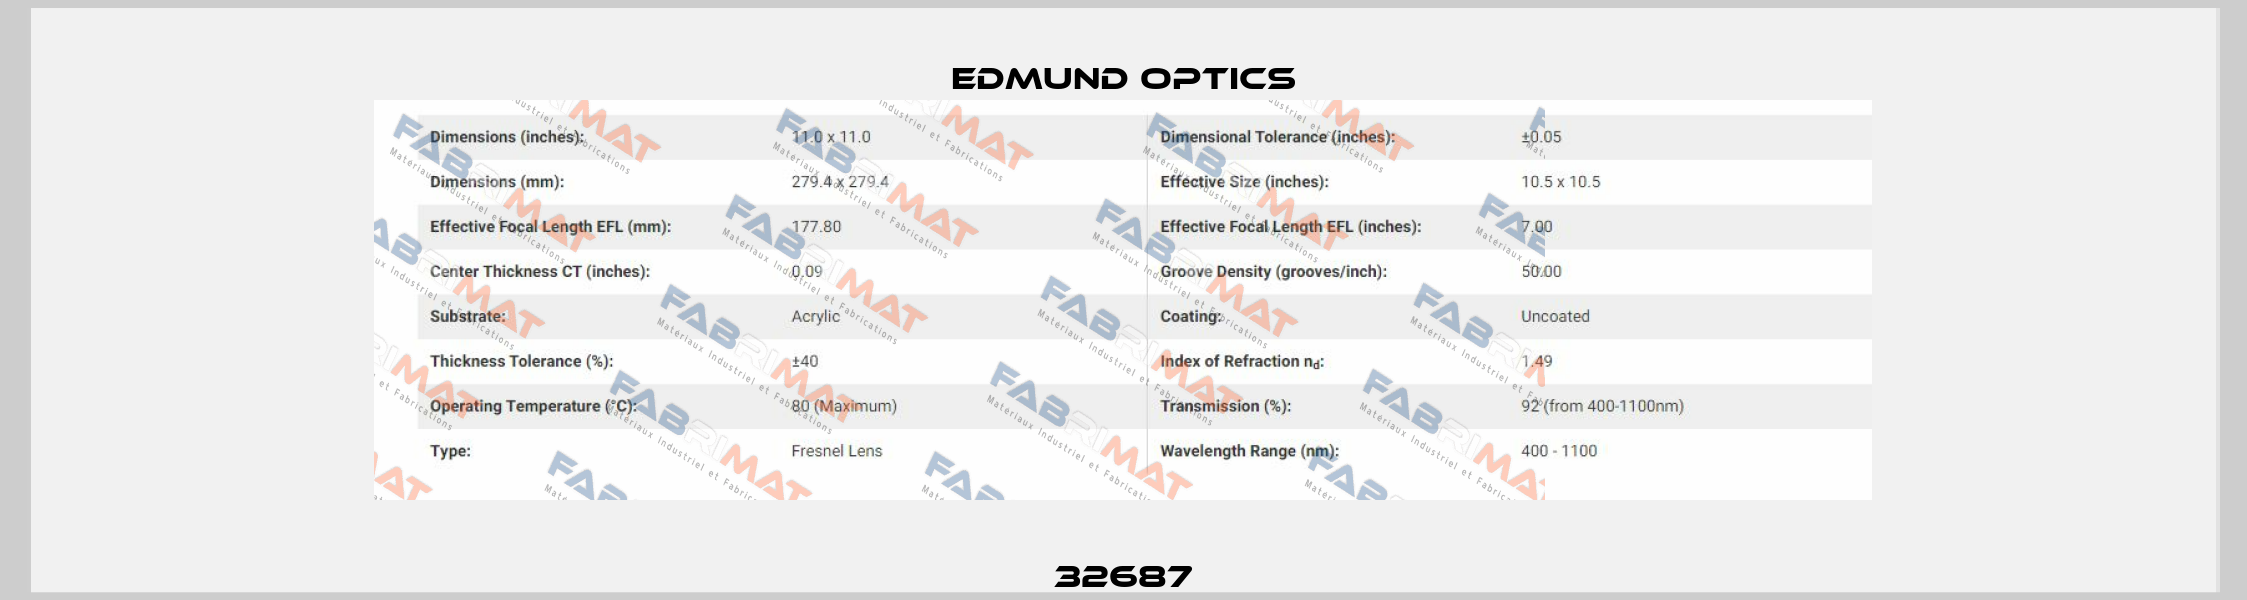 32687 Edmund Optics